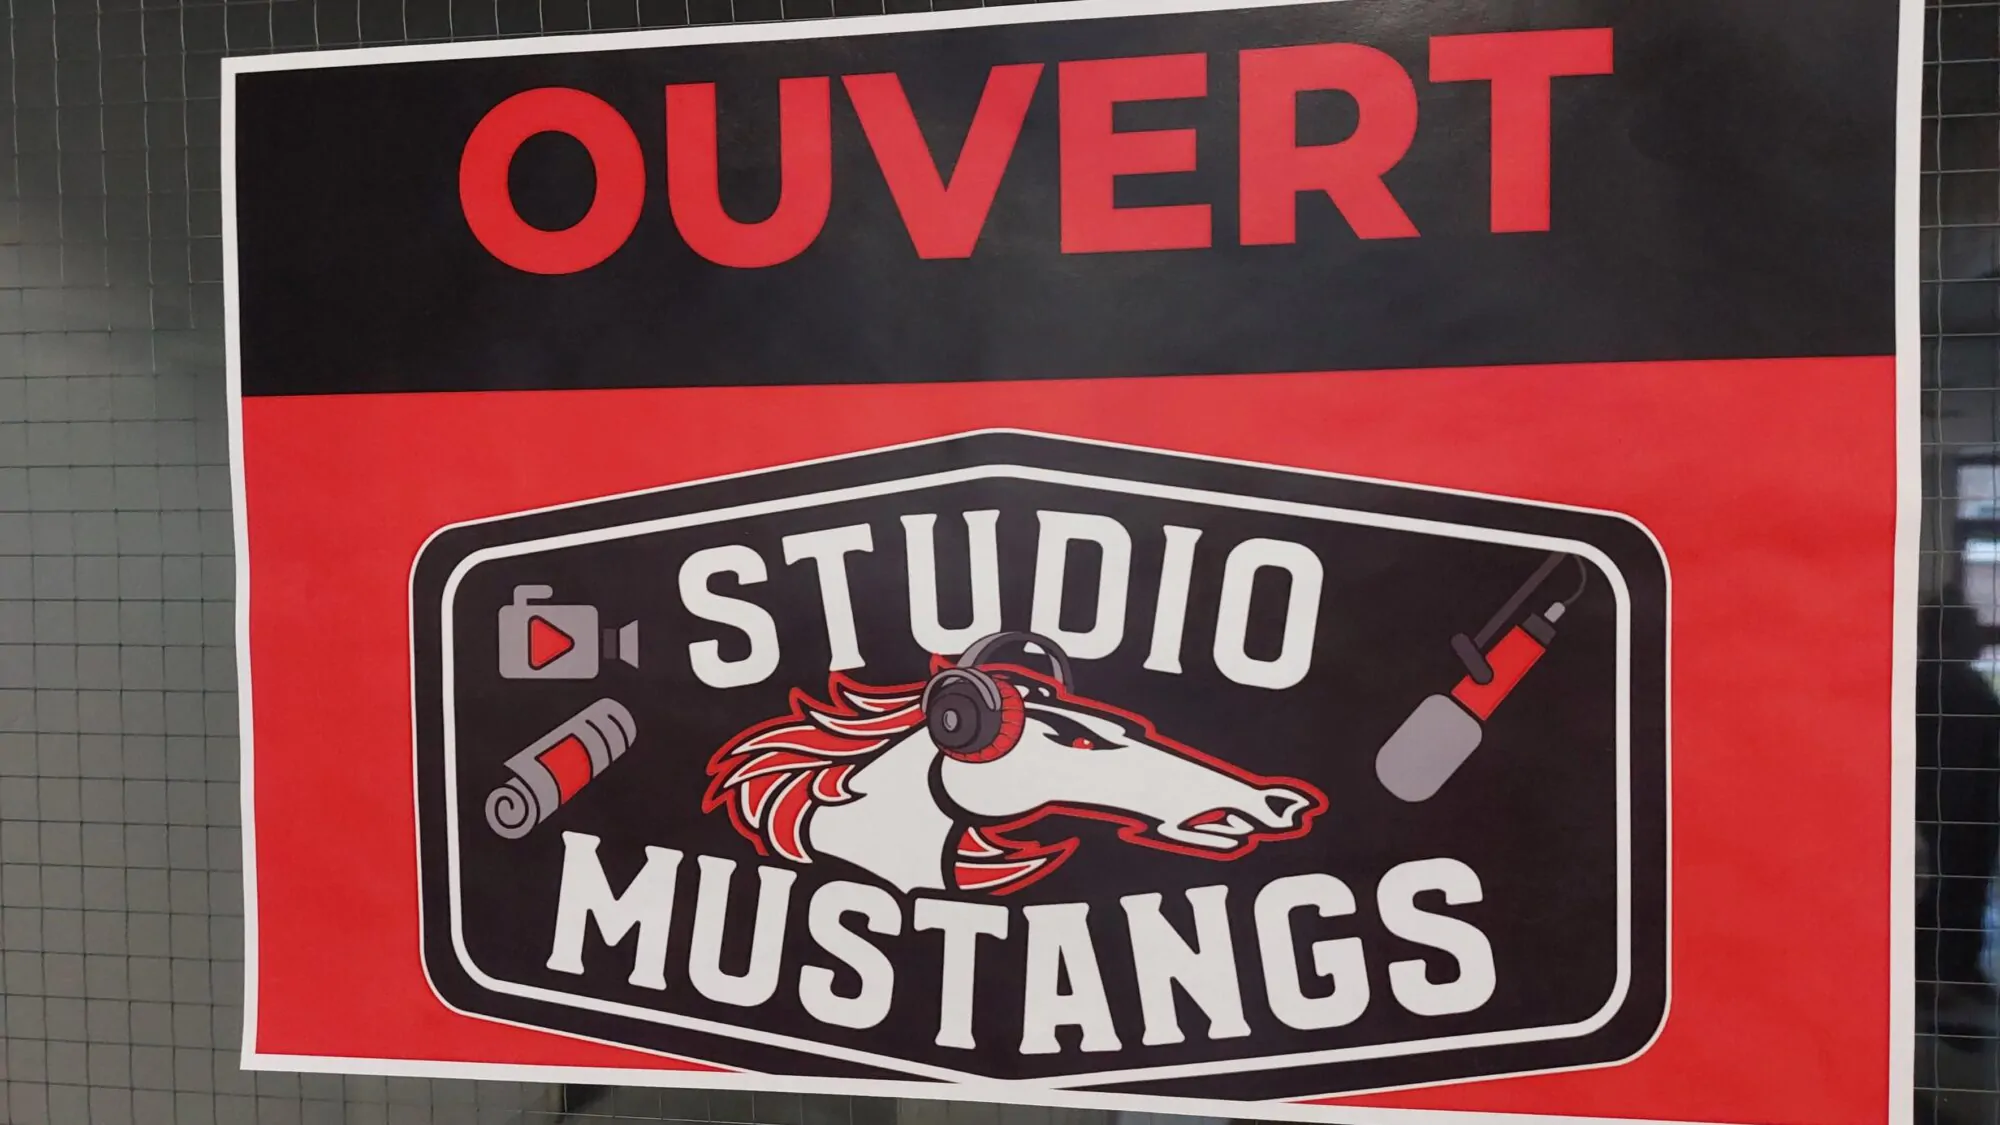 Studio Mustang